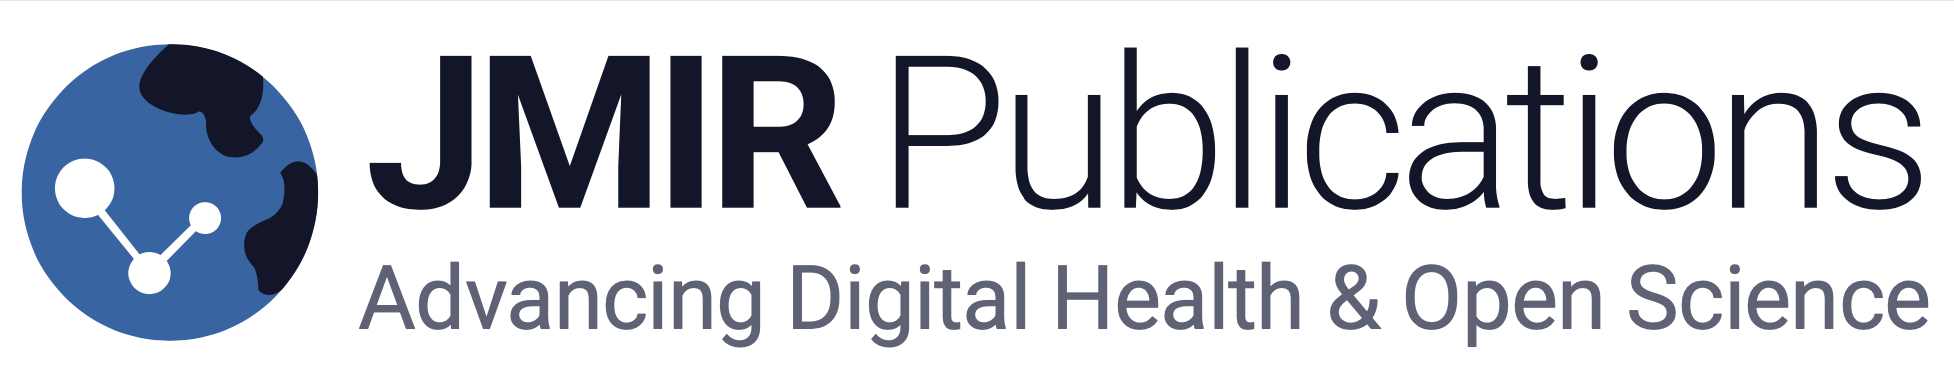 JMIR-Publications-logo-2020-01.png